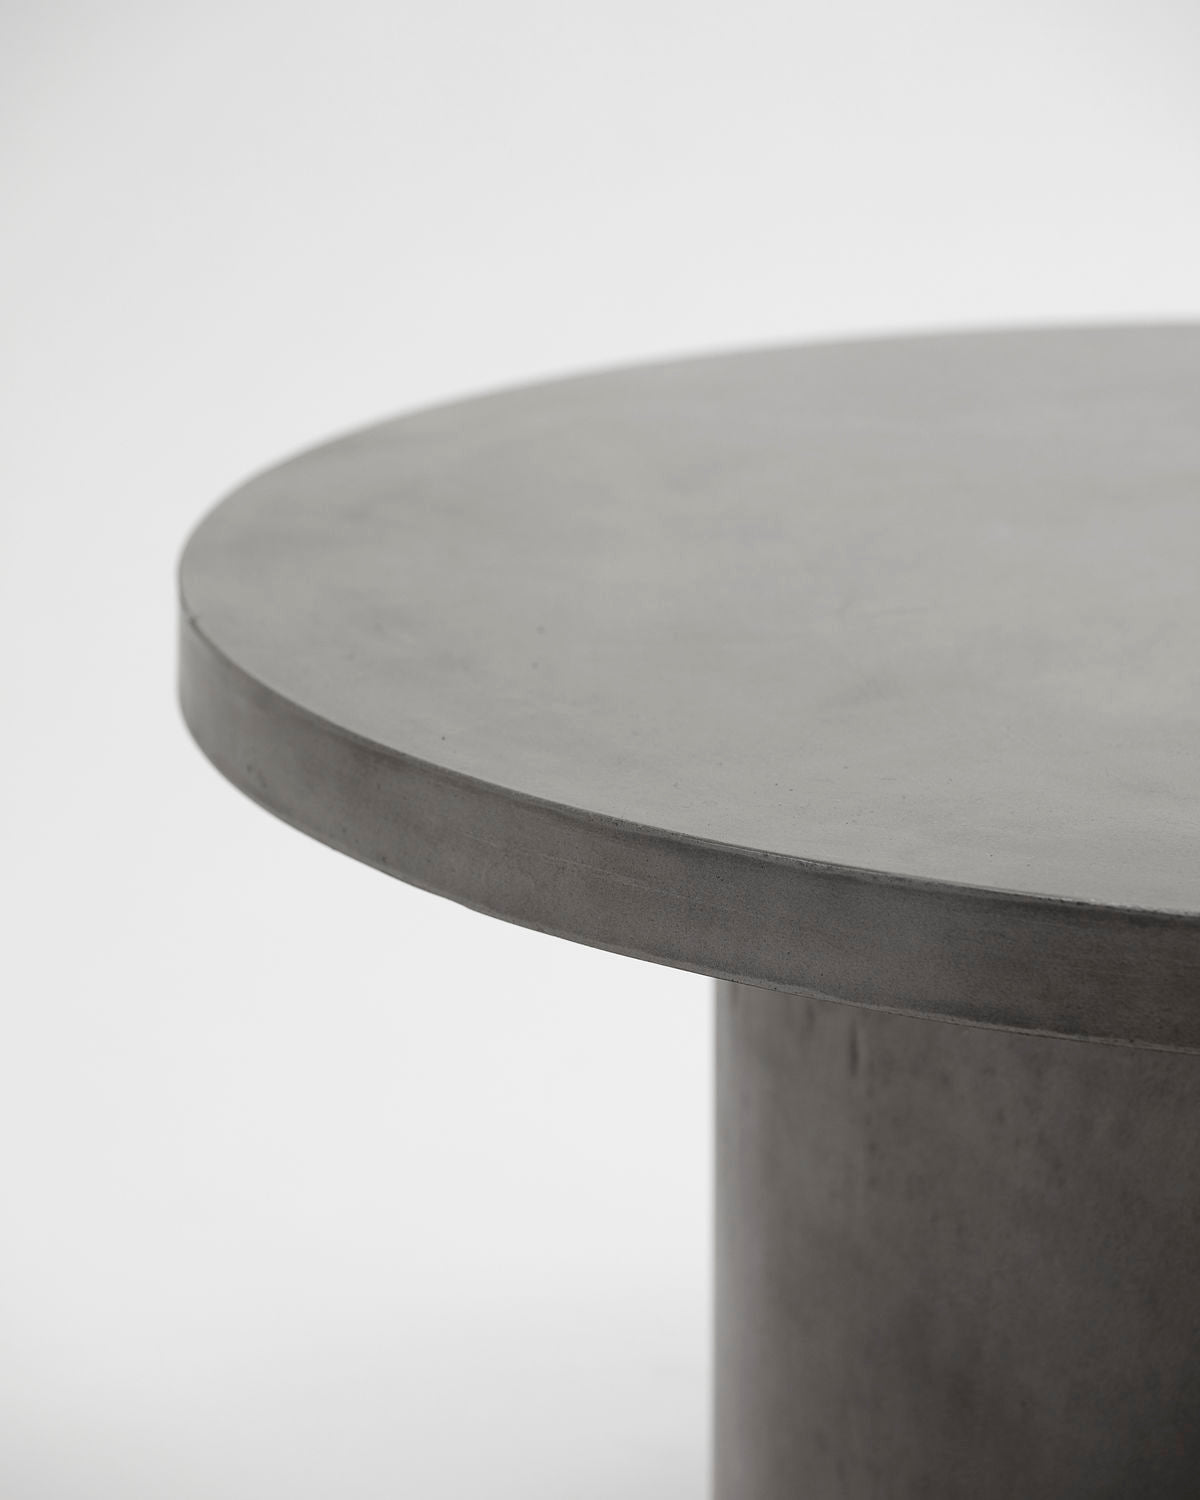 Table, Stone, Grey